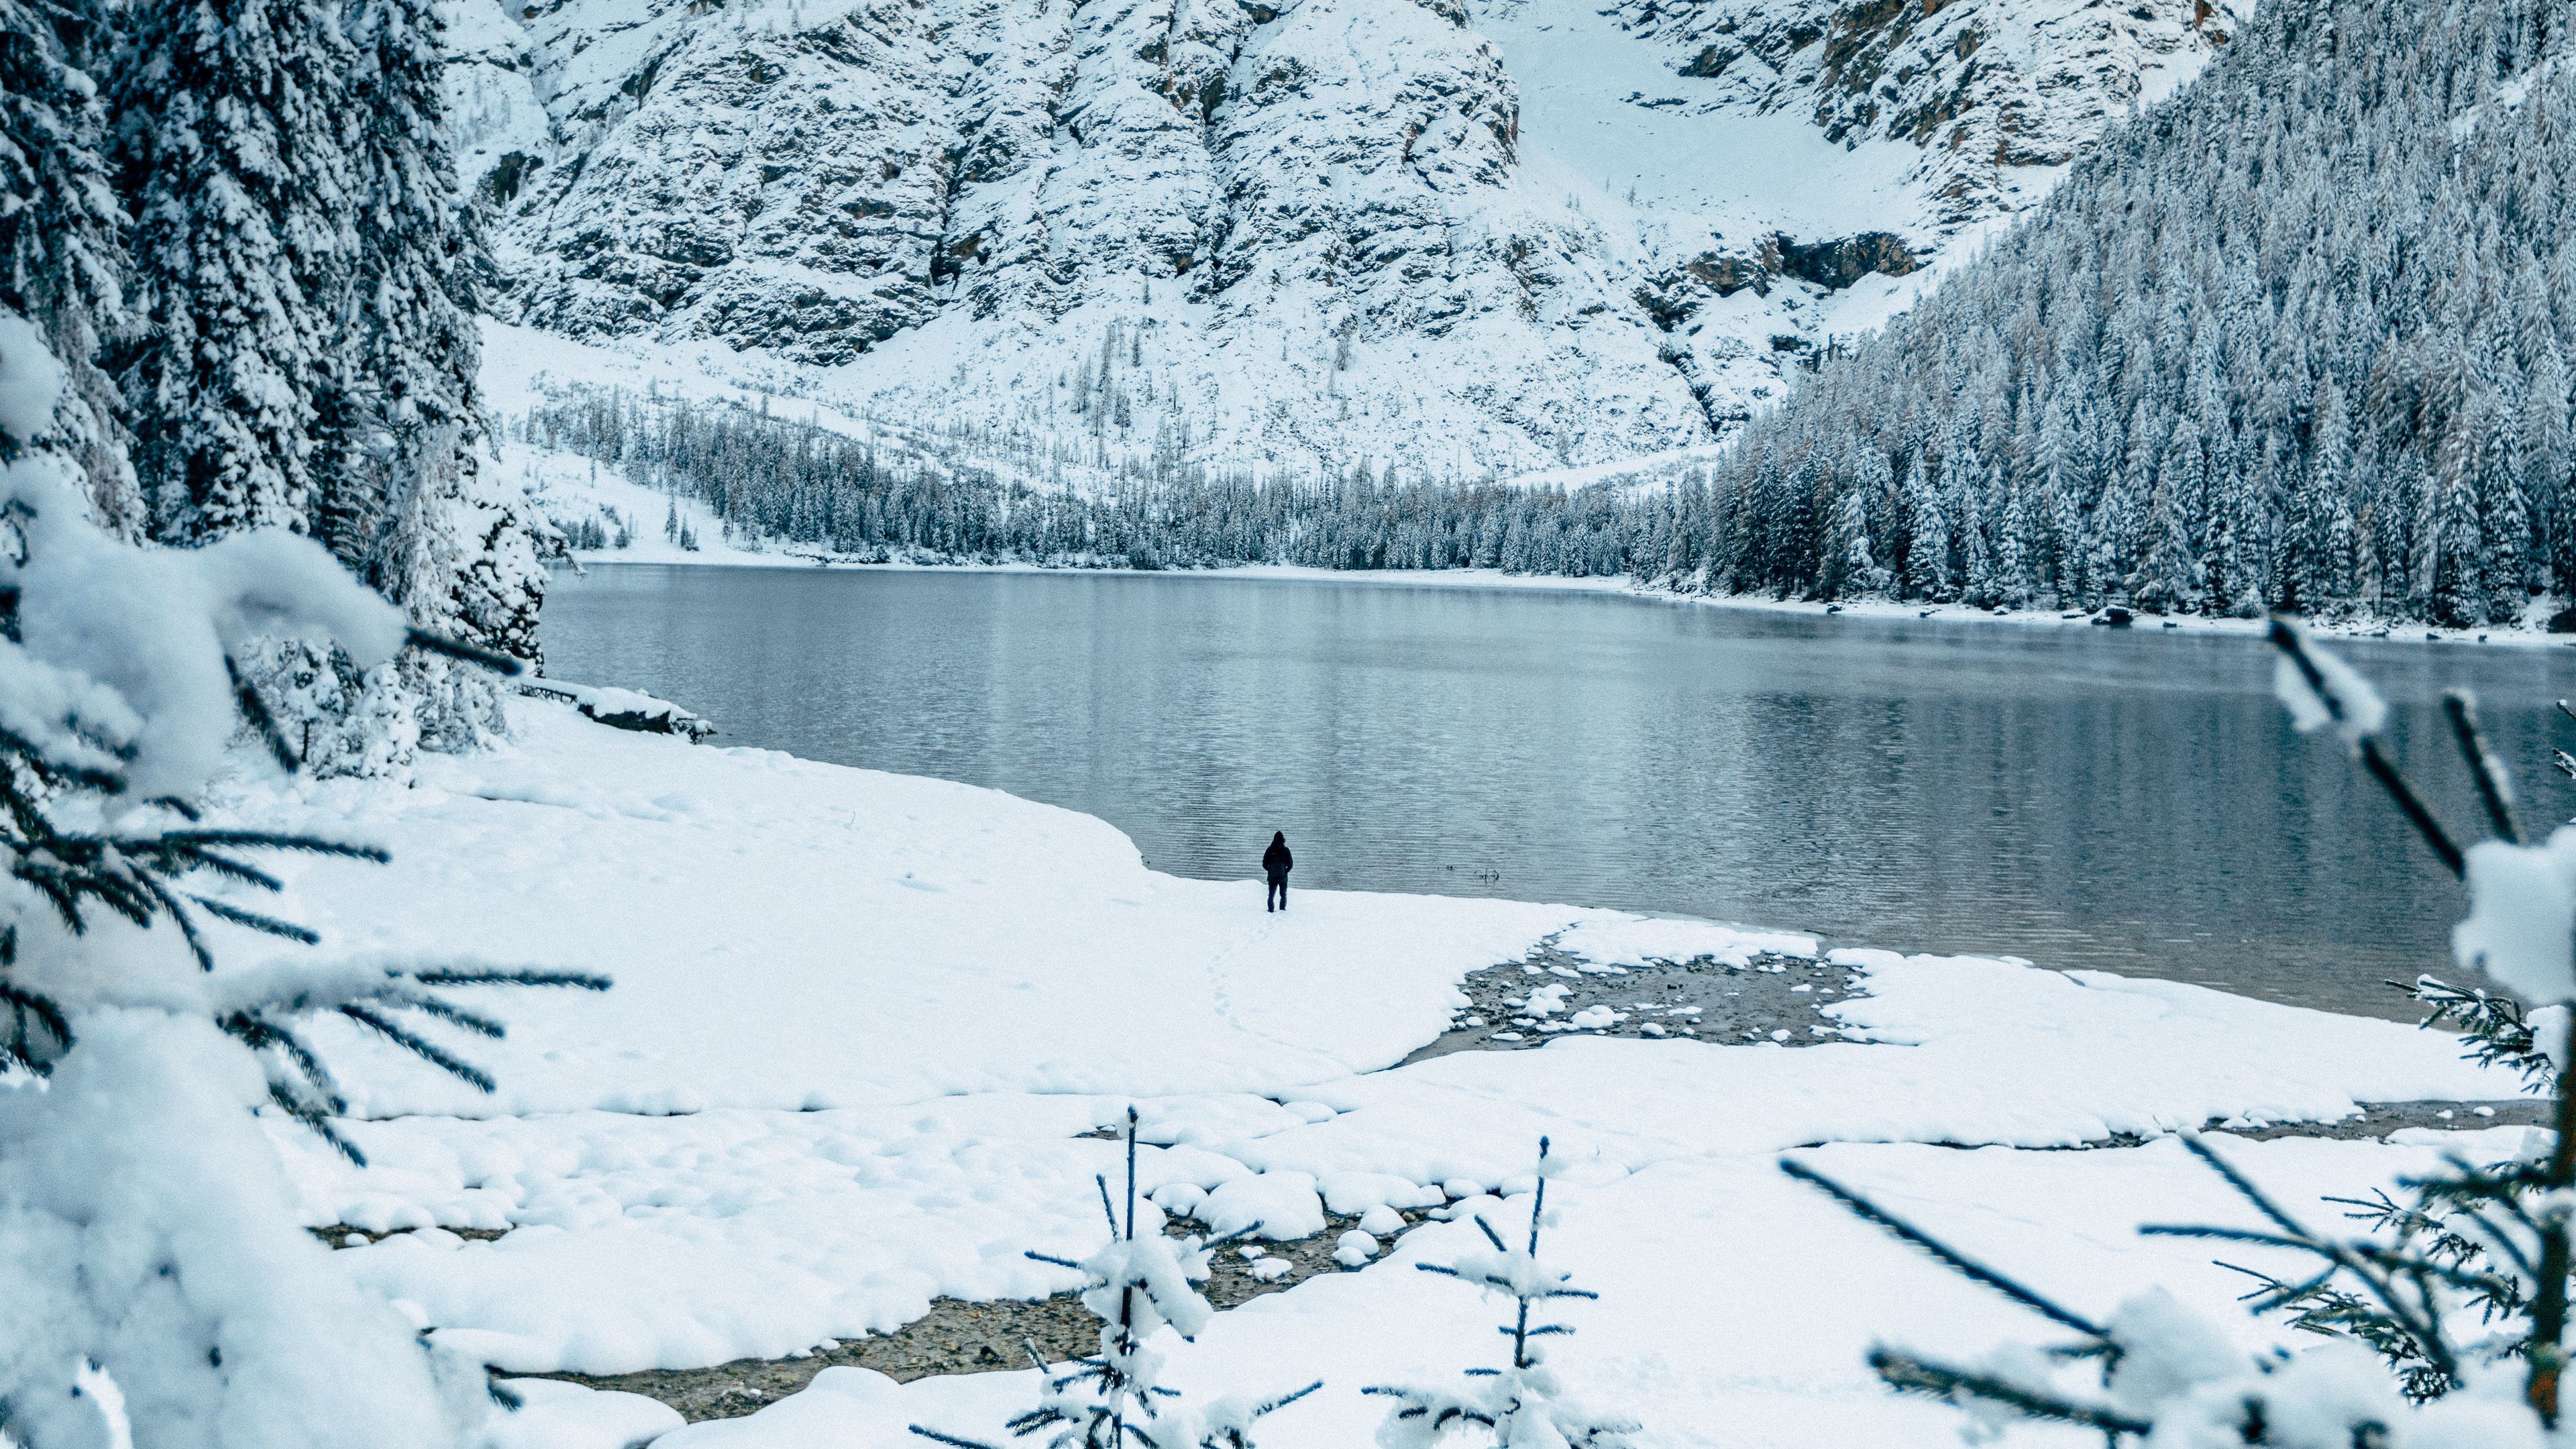 Download wallpaper 3840x2160 lake, mountains, snow, shore, winter 4k uhd 16:9 HD background